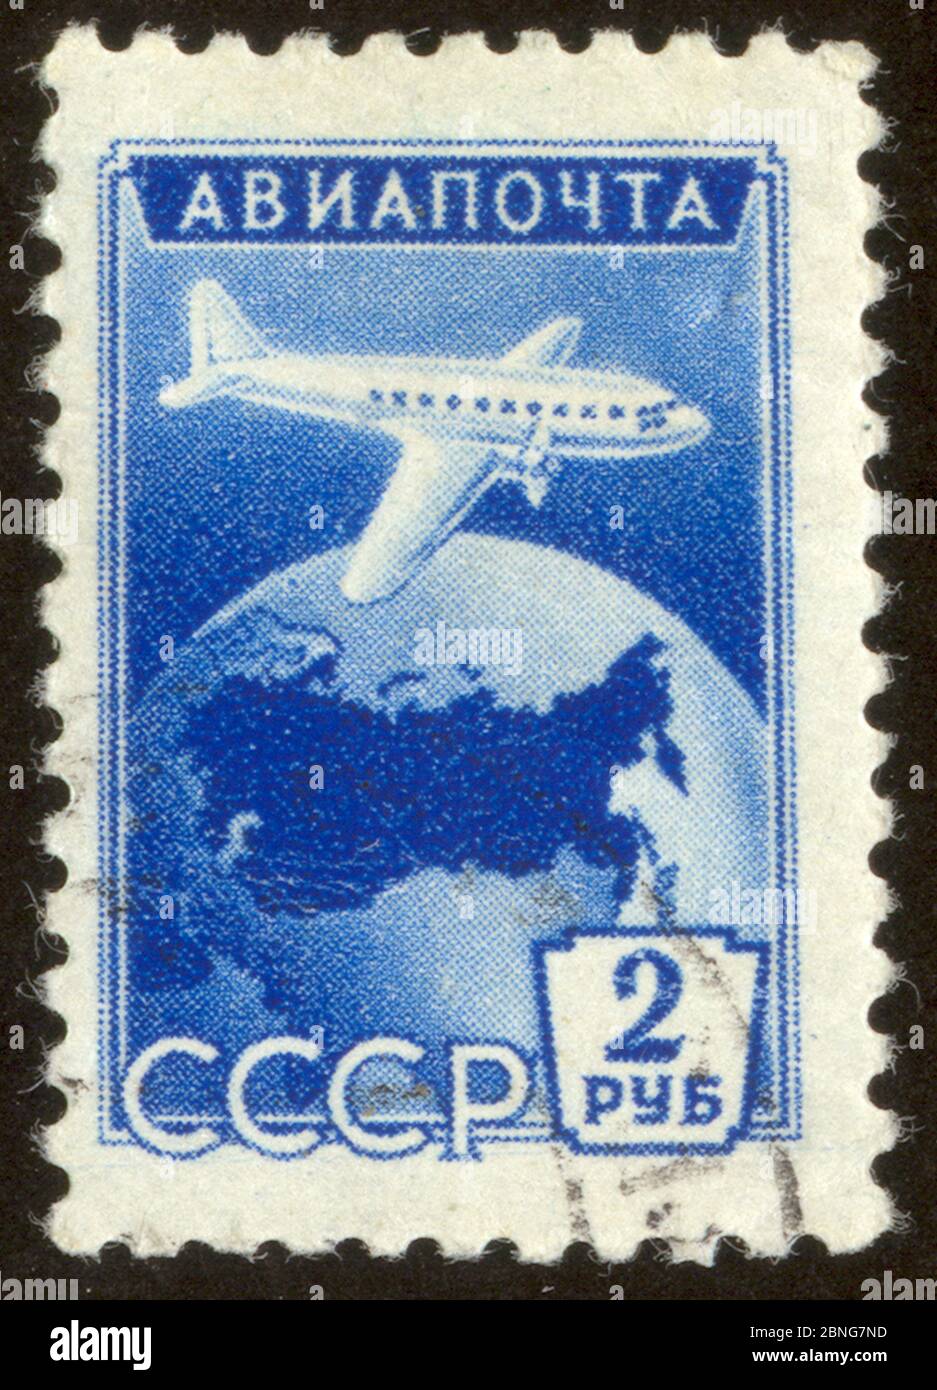 RUSSIA - CIRCA 1955: stamp printed by Russia, shows plane, circa 1955. Stock Photo